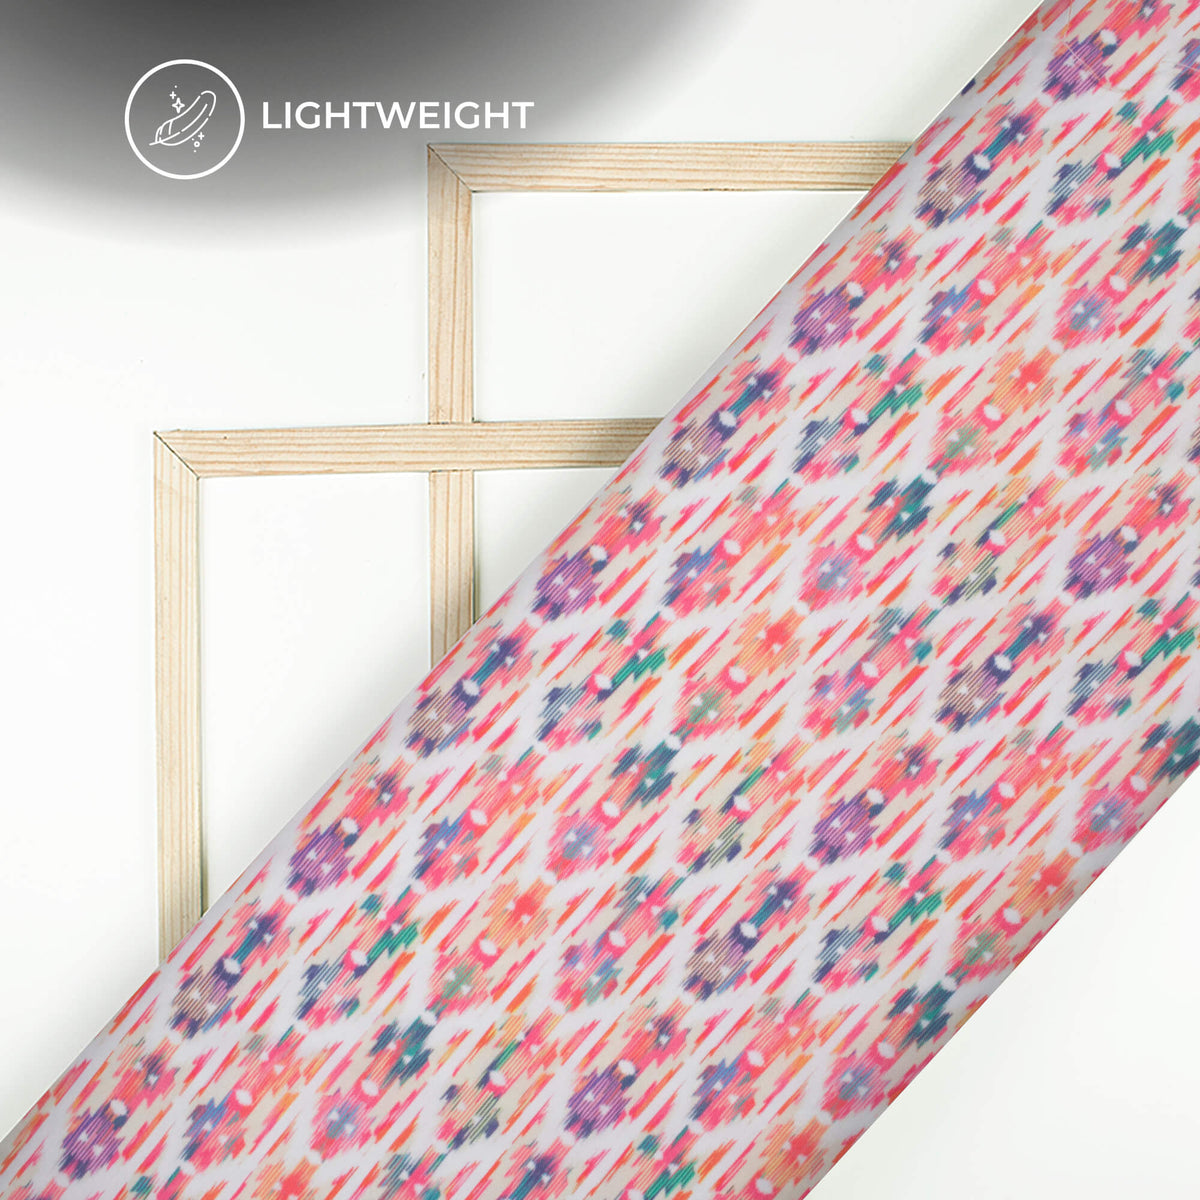 Taffy Pink Abstract Digital Print Rayon Fabric